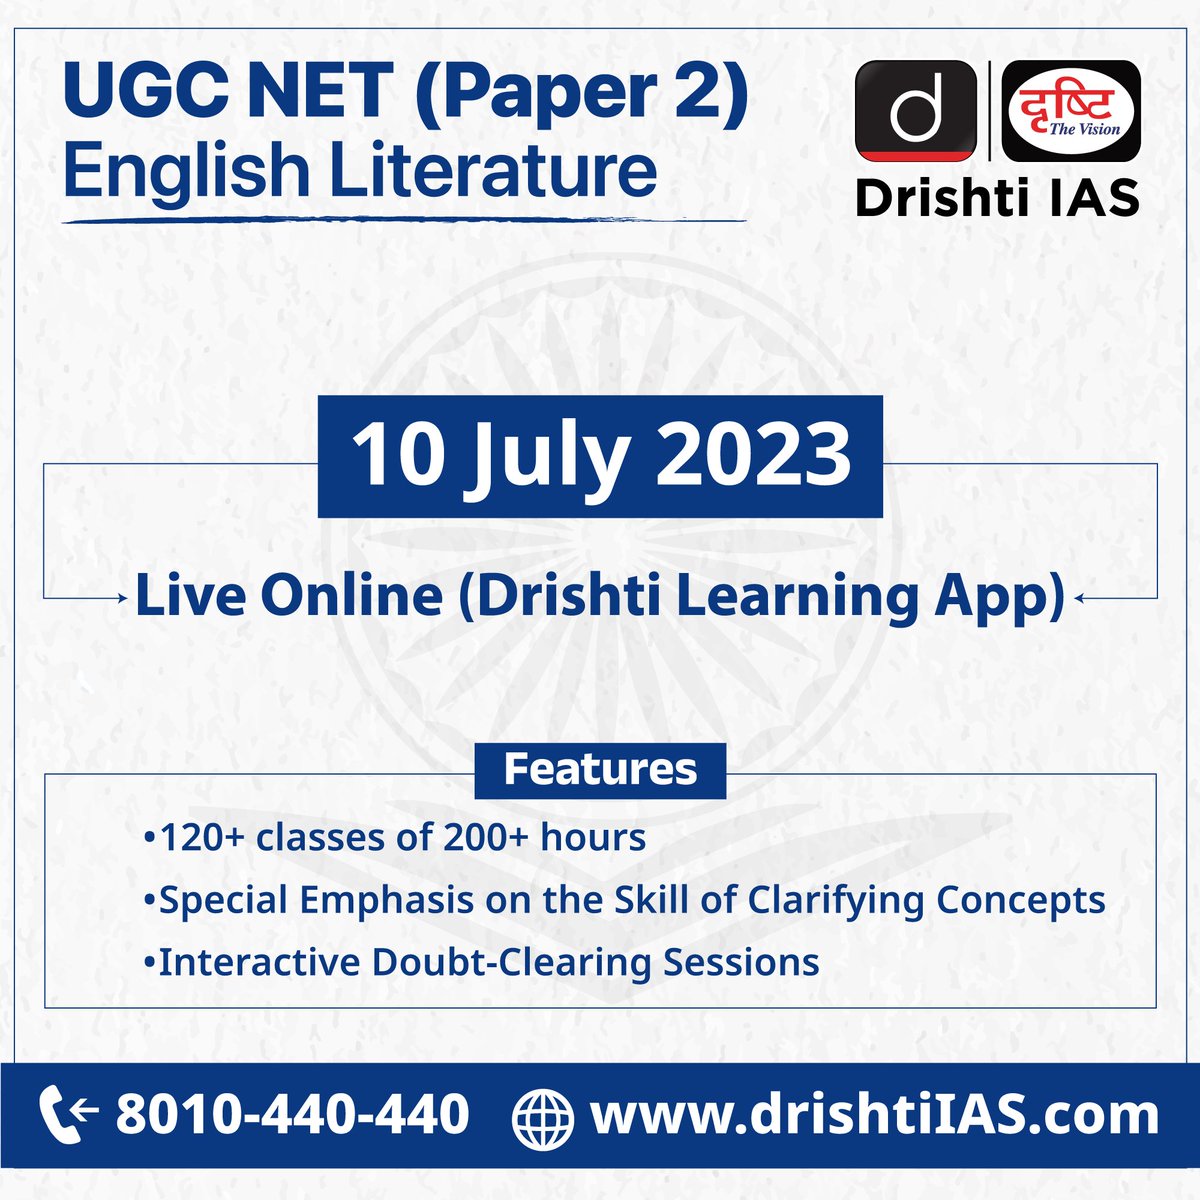 Choose optimum preparation with Drishti IAS’ UGC NET – Paper II (English Literature) course. Join today!

Check the link: https://t.co/8CBQMX6Ue5

#UGC #NET #JRF #UGCNET #Paper #Teaching #EnglishLiterature #Learning #Preparation #Online #Study #DrishtiIAS #DrishtiIASEnglish https://t.co/YB4zCimVQR